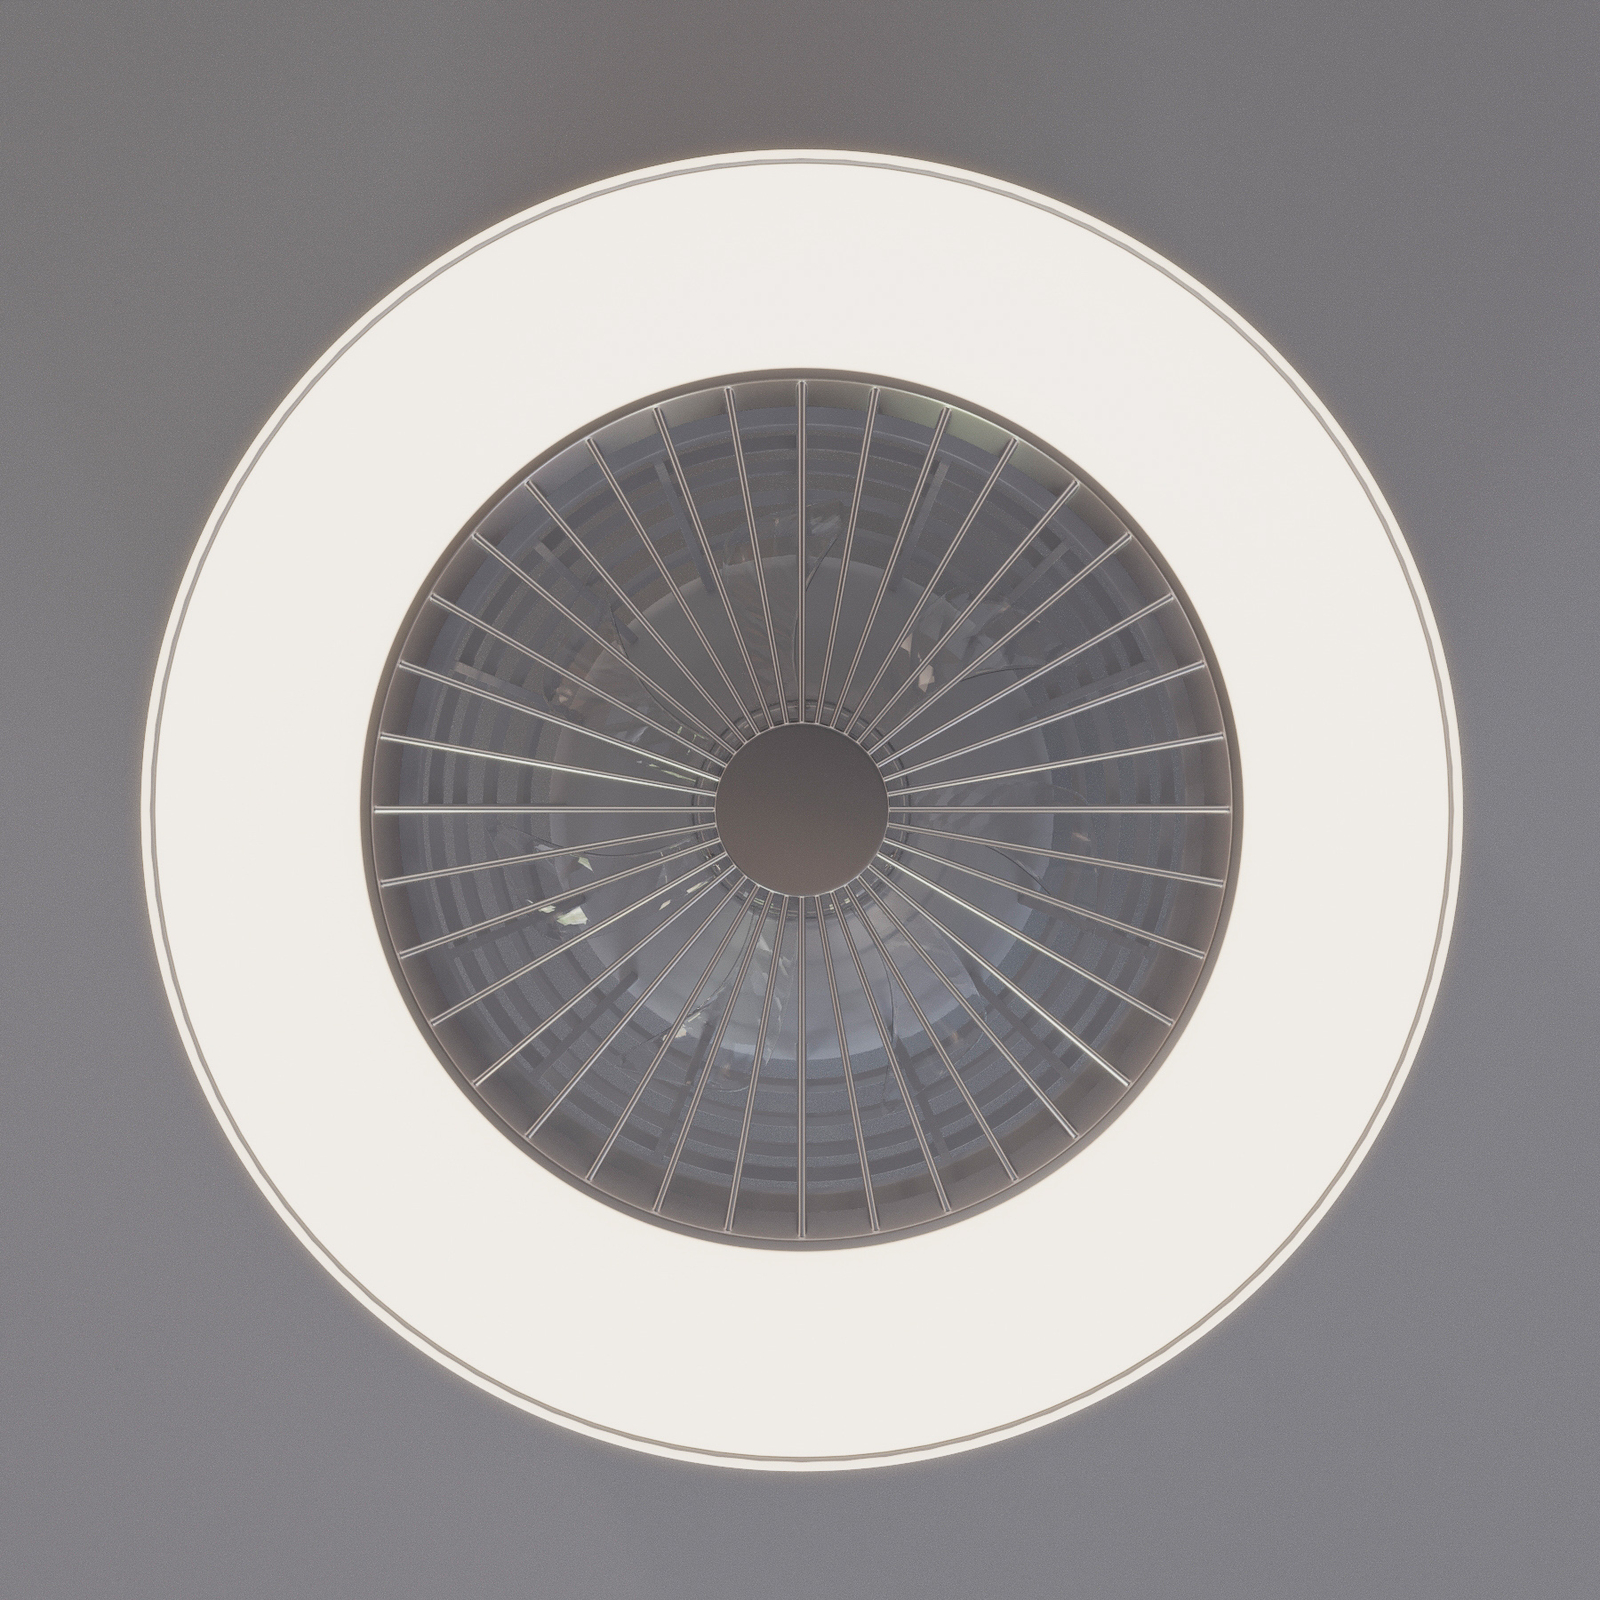 Starluna Circuma LED ceiling fan, white